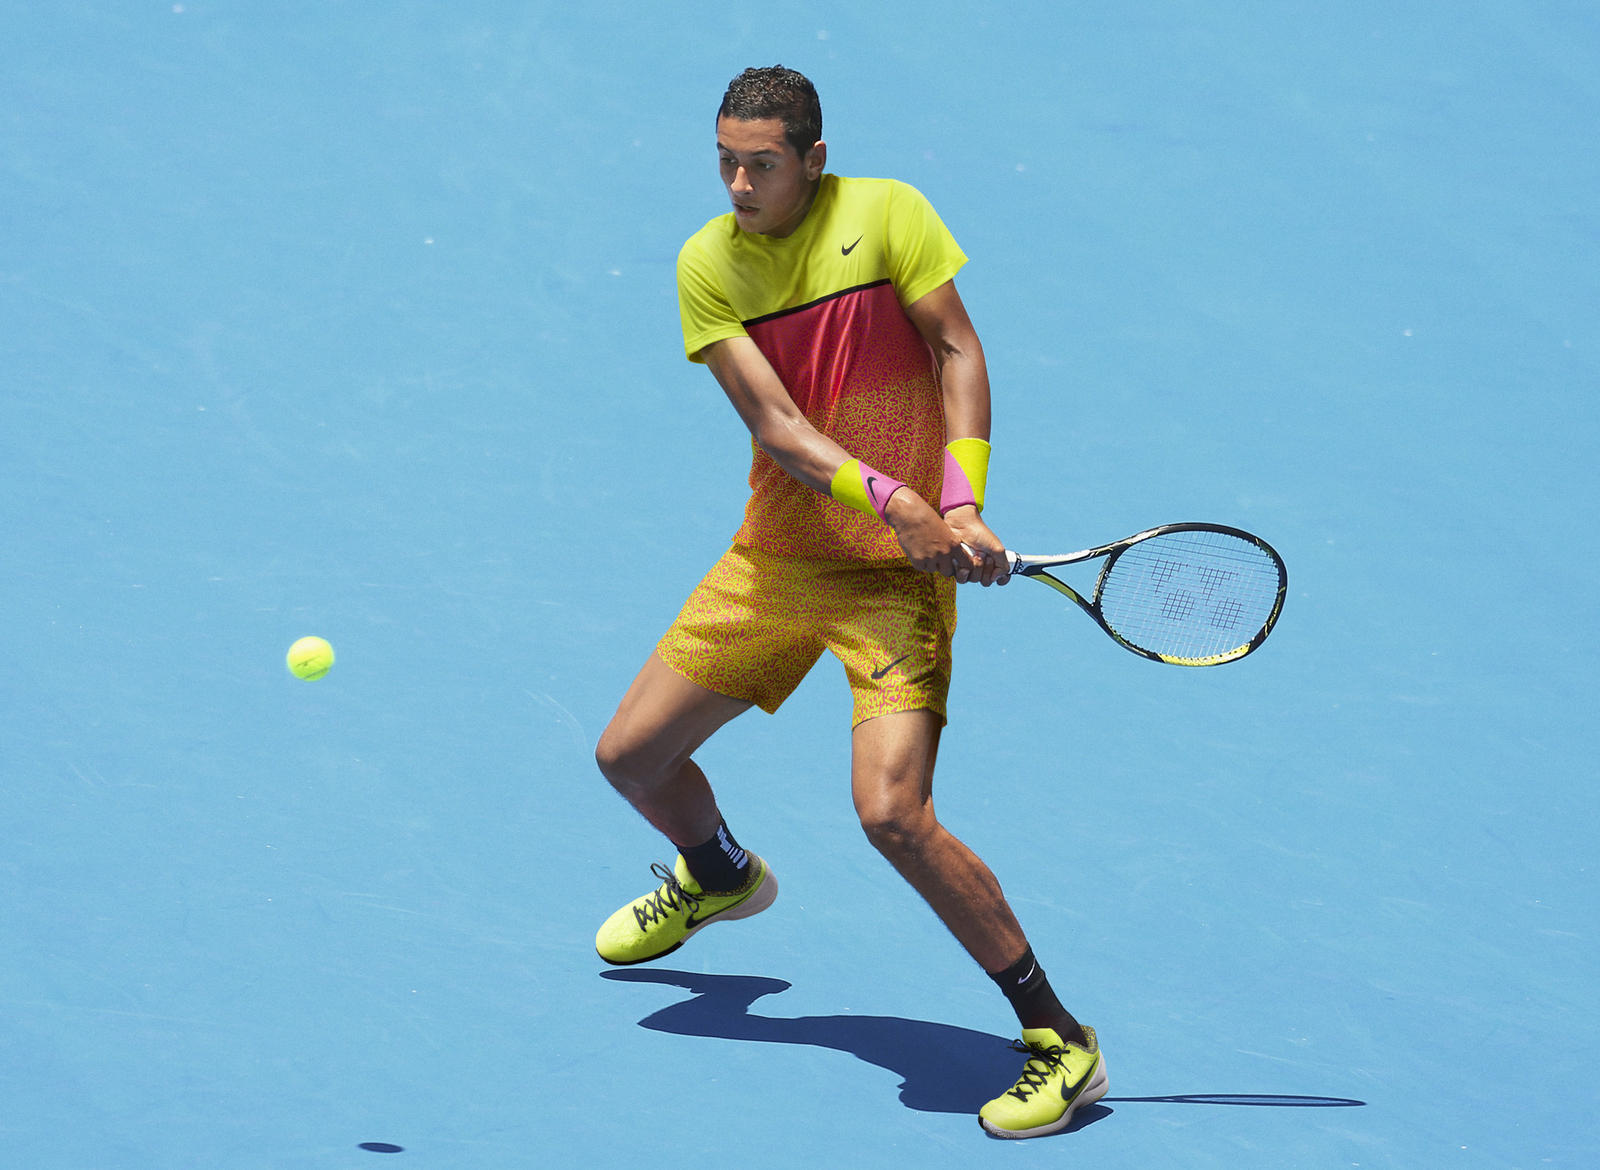 australian open 2015 Nick Kyrgios outfit nike tennis